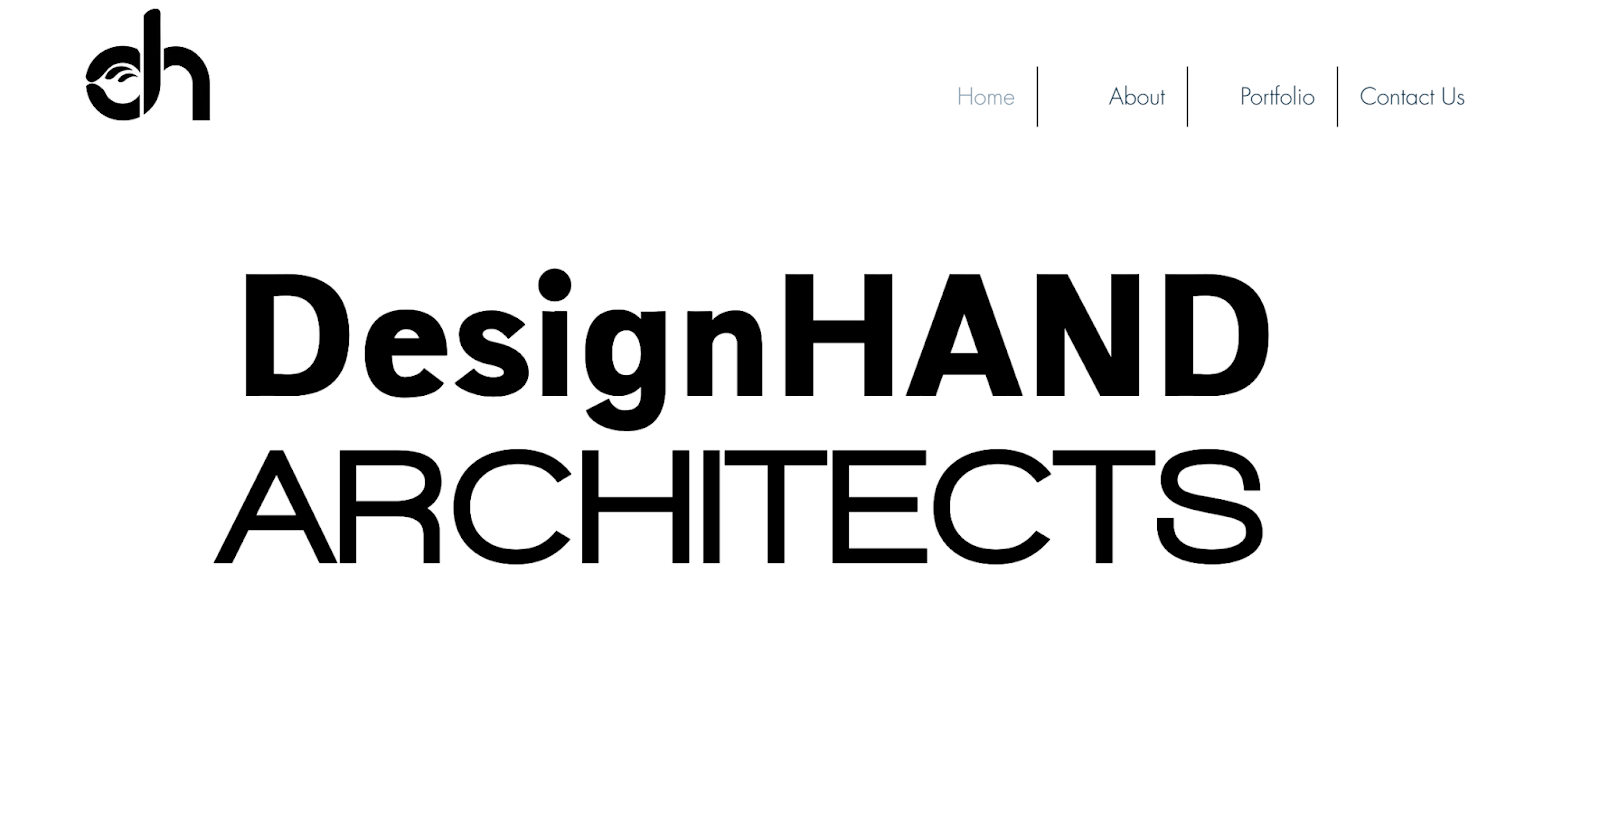 Architecture website example: DesignHand Architects